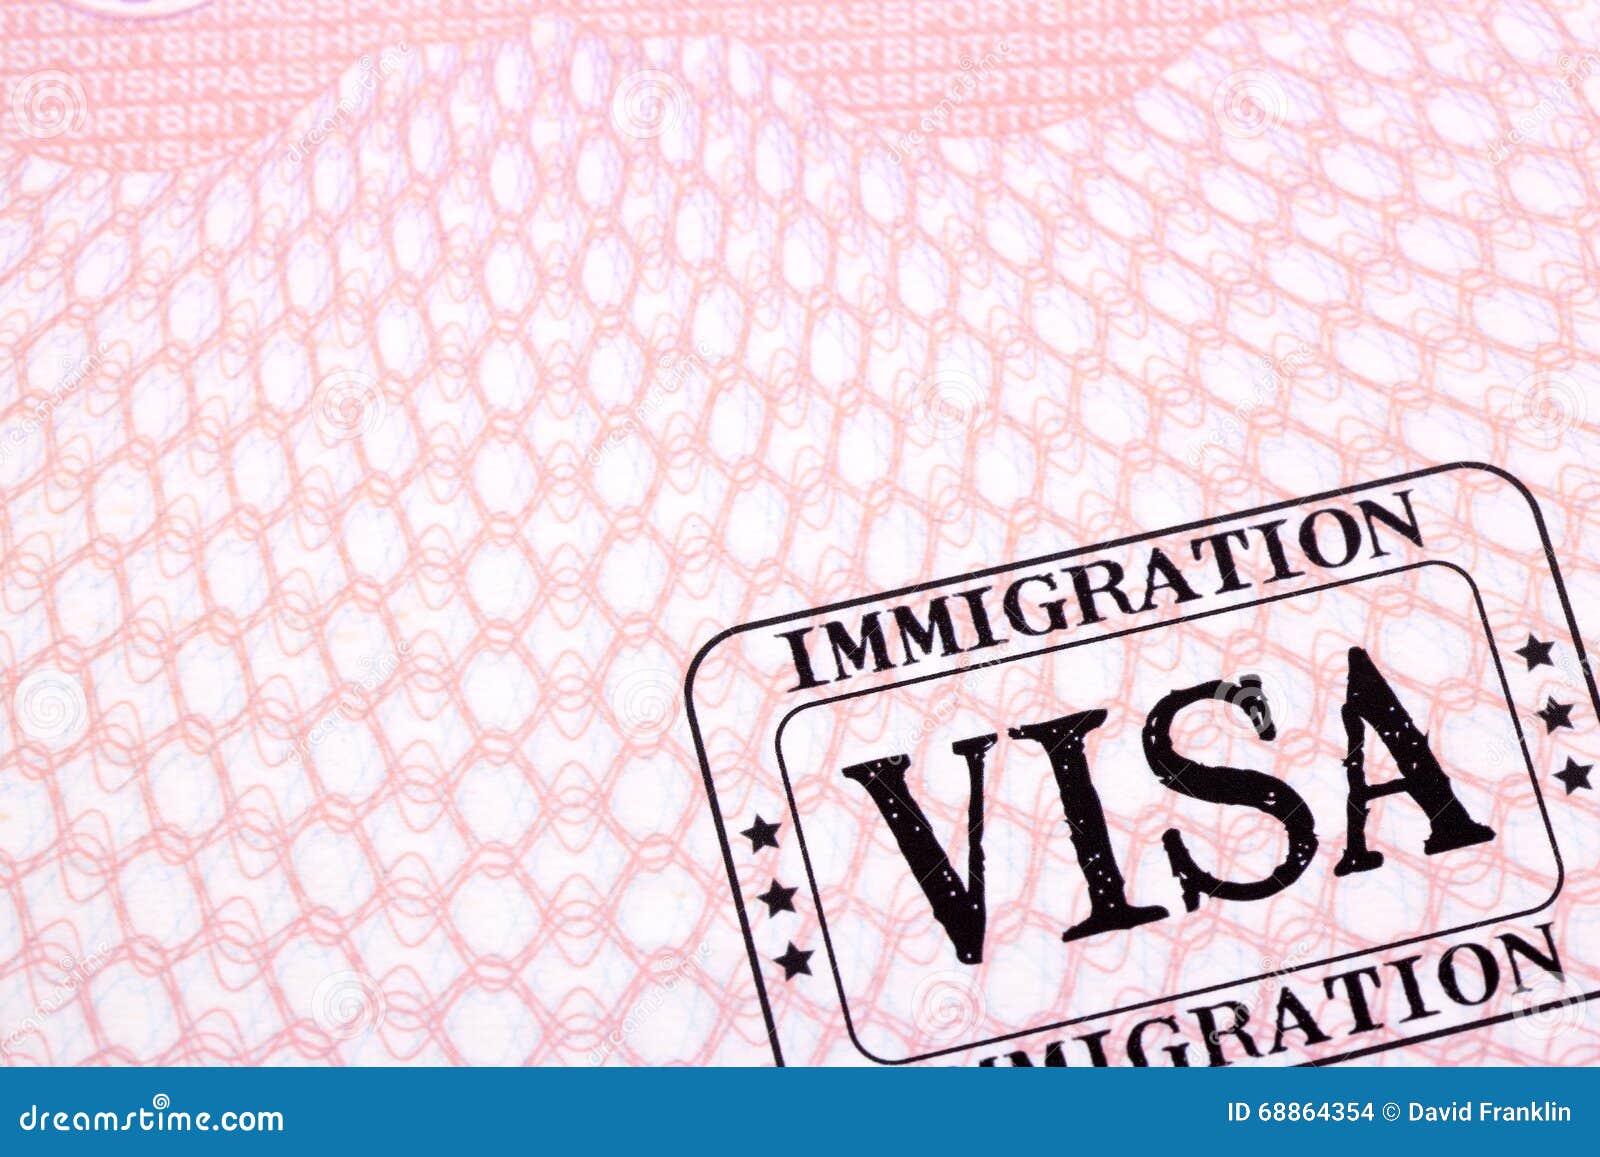 immigration visa document stamp passport page close up